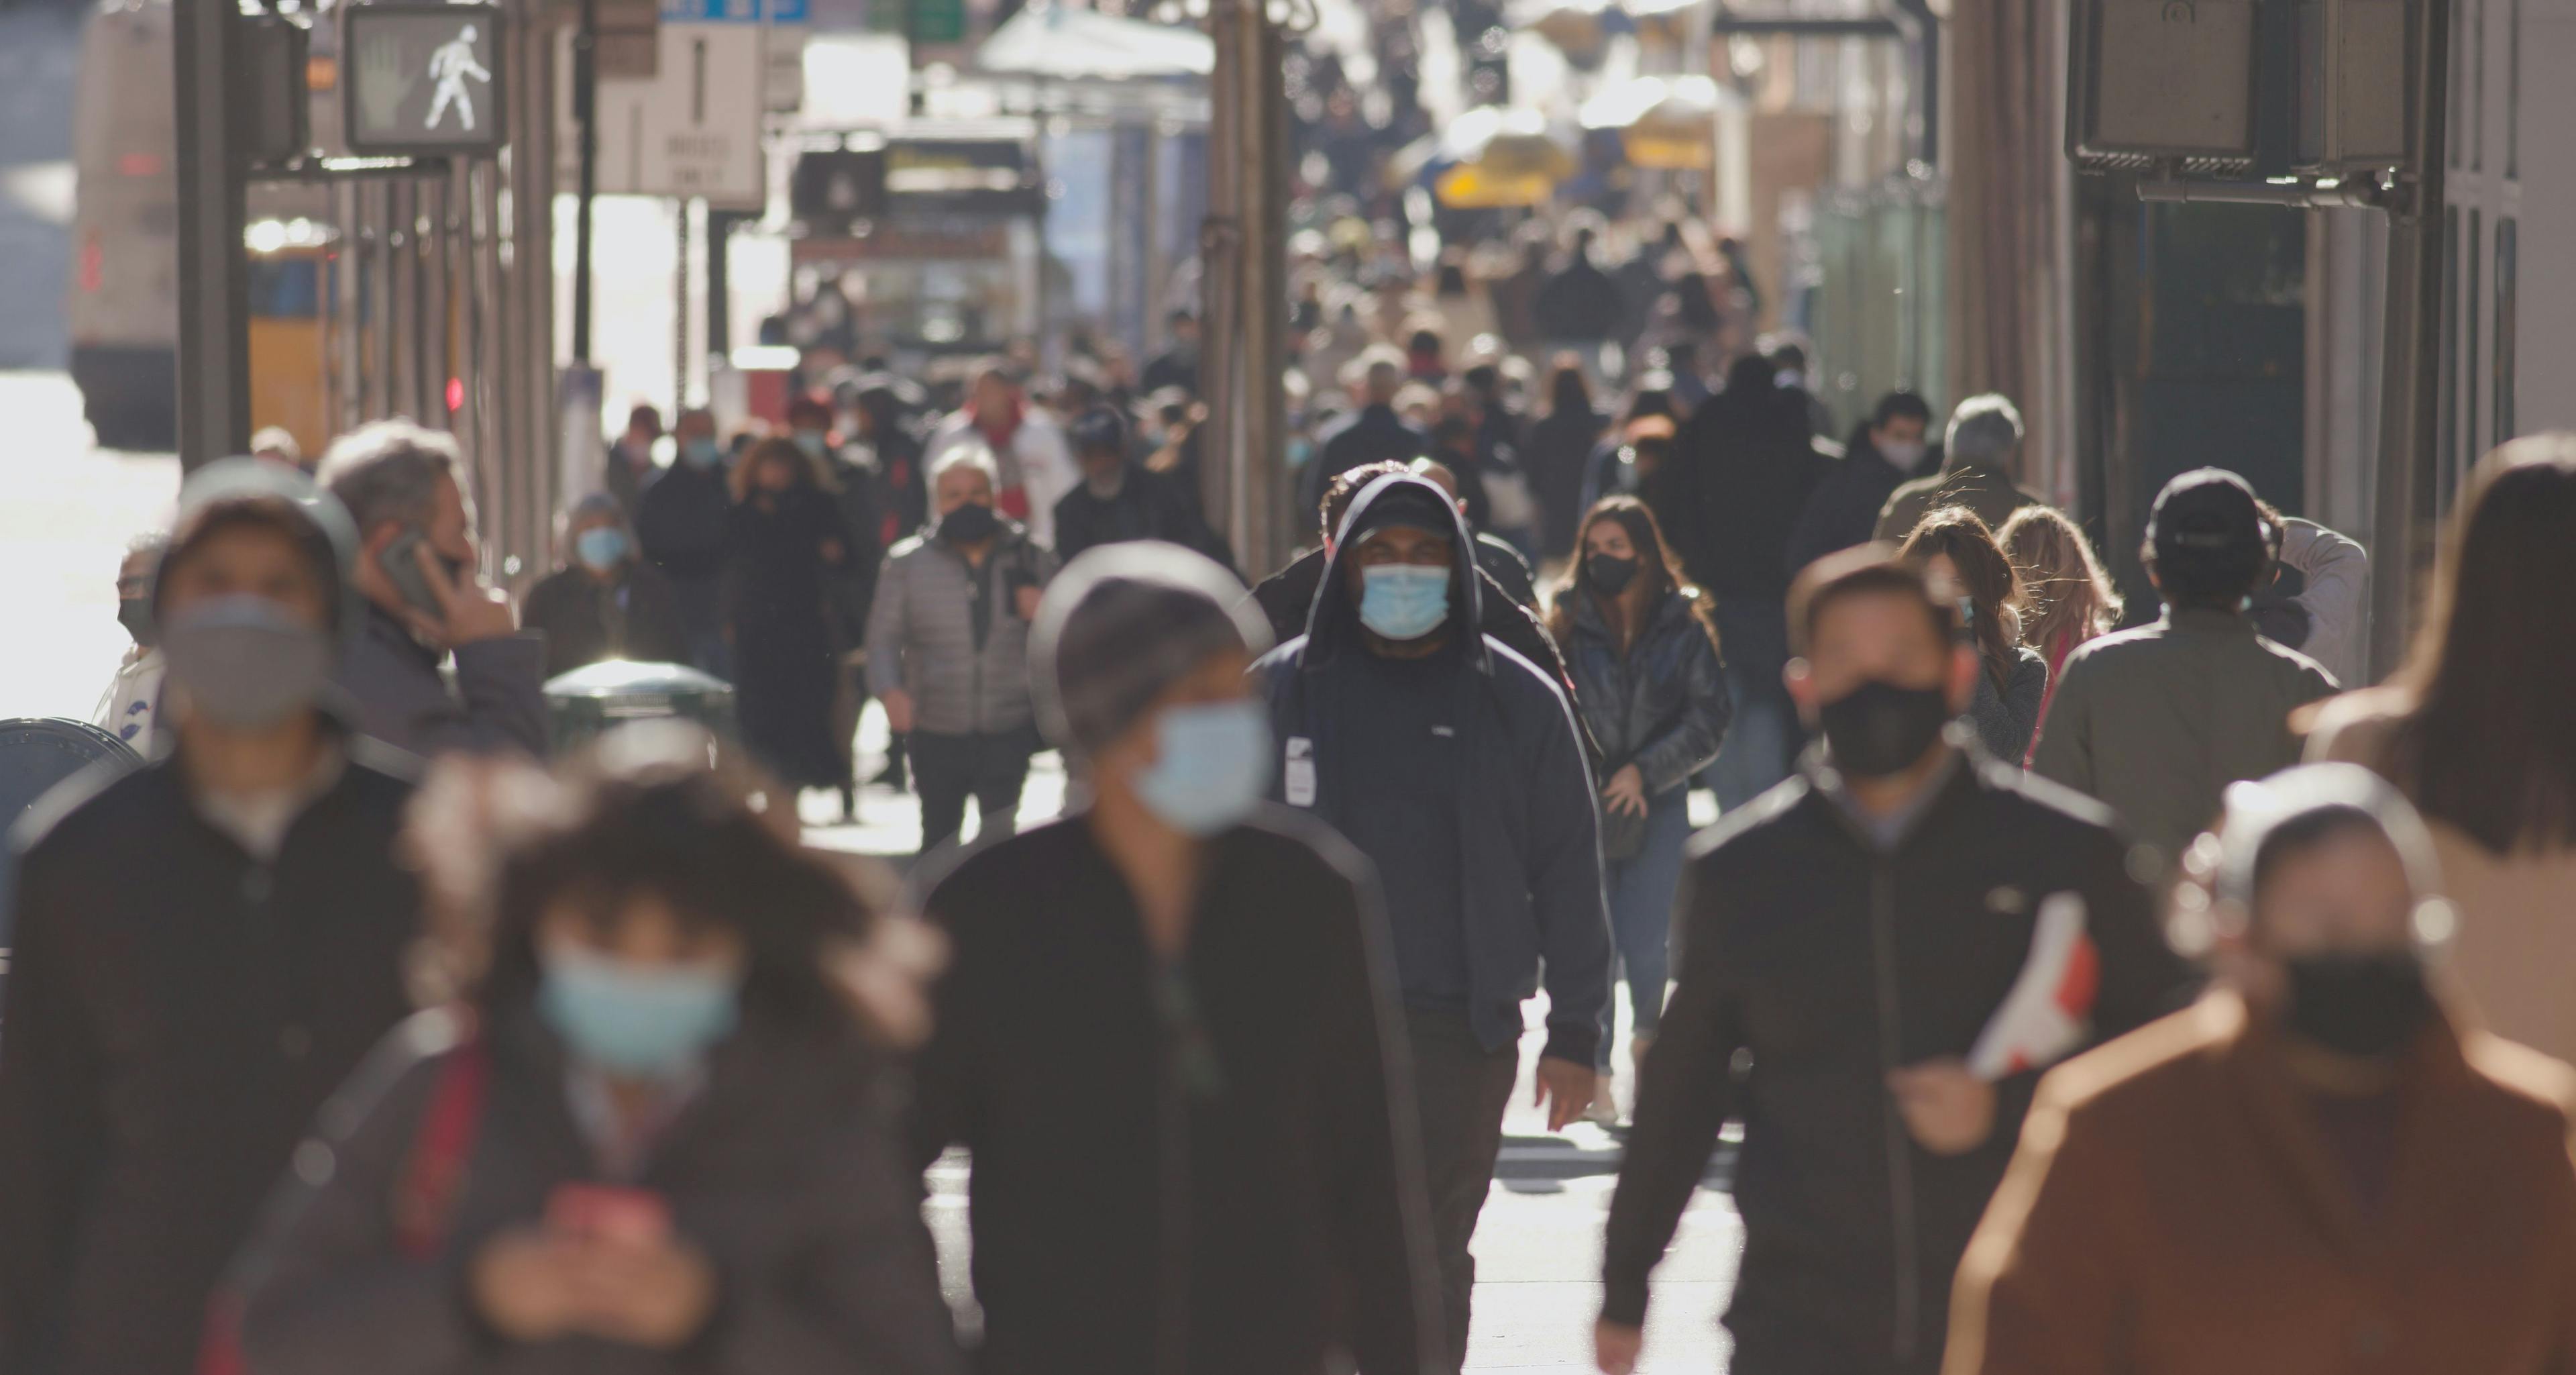 People wearing masks during COIVD-19 pandemic -- Image credit: blvdone | stock.adobe.com